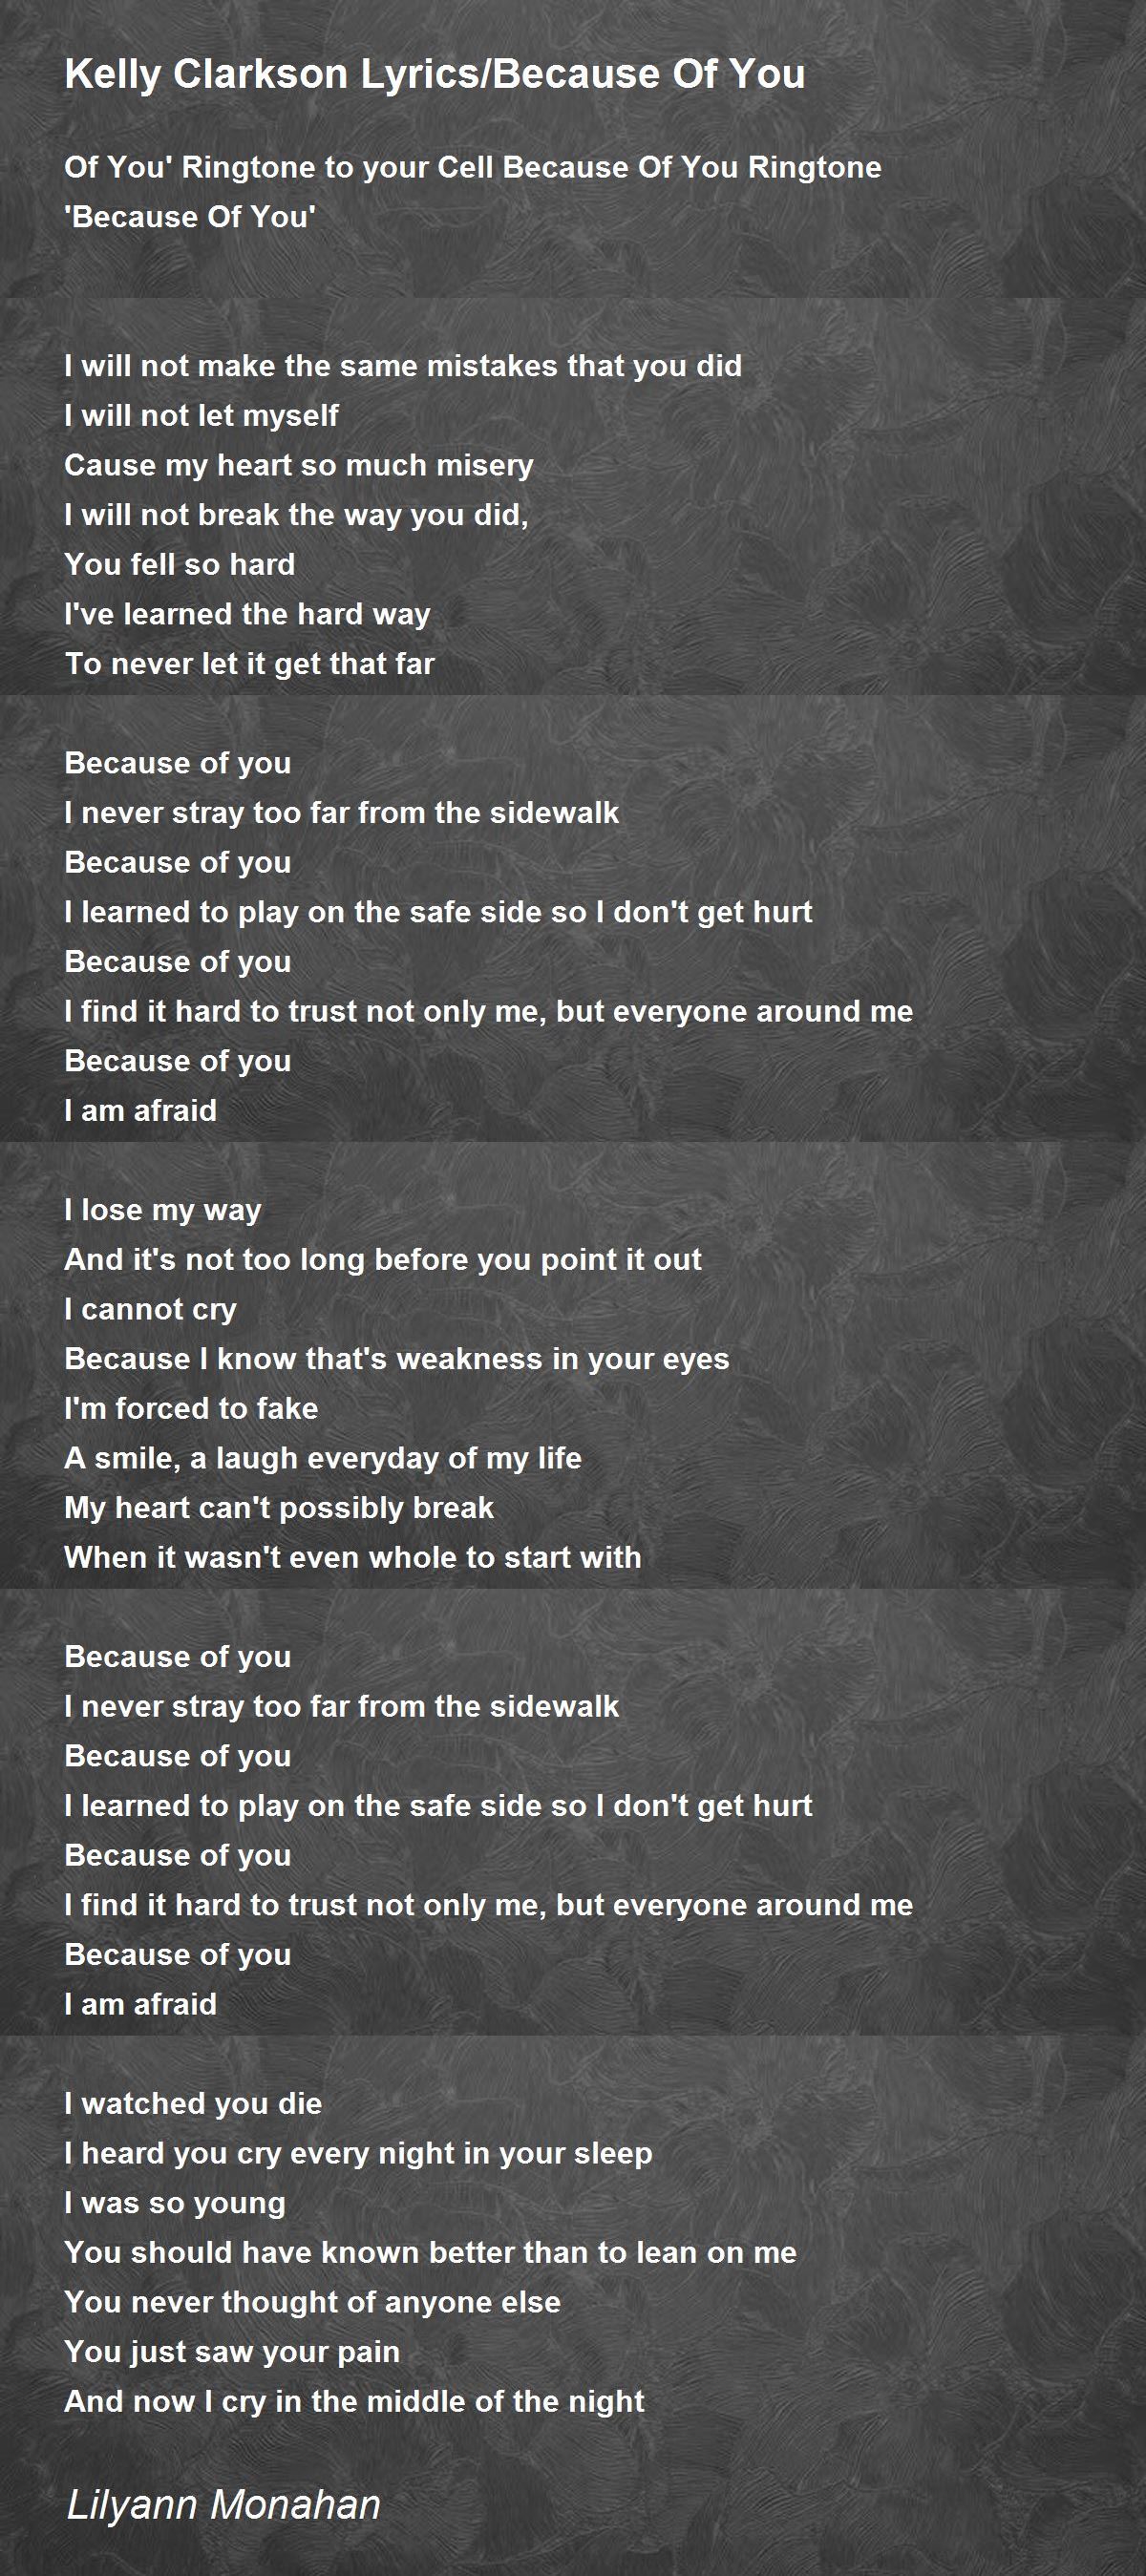 Kelly Clarkson Lyrics/Because Of You - Kelly Clarkson Lyrics/Because Of You  Poem by Lilyann Monahan